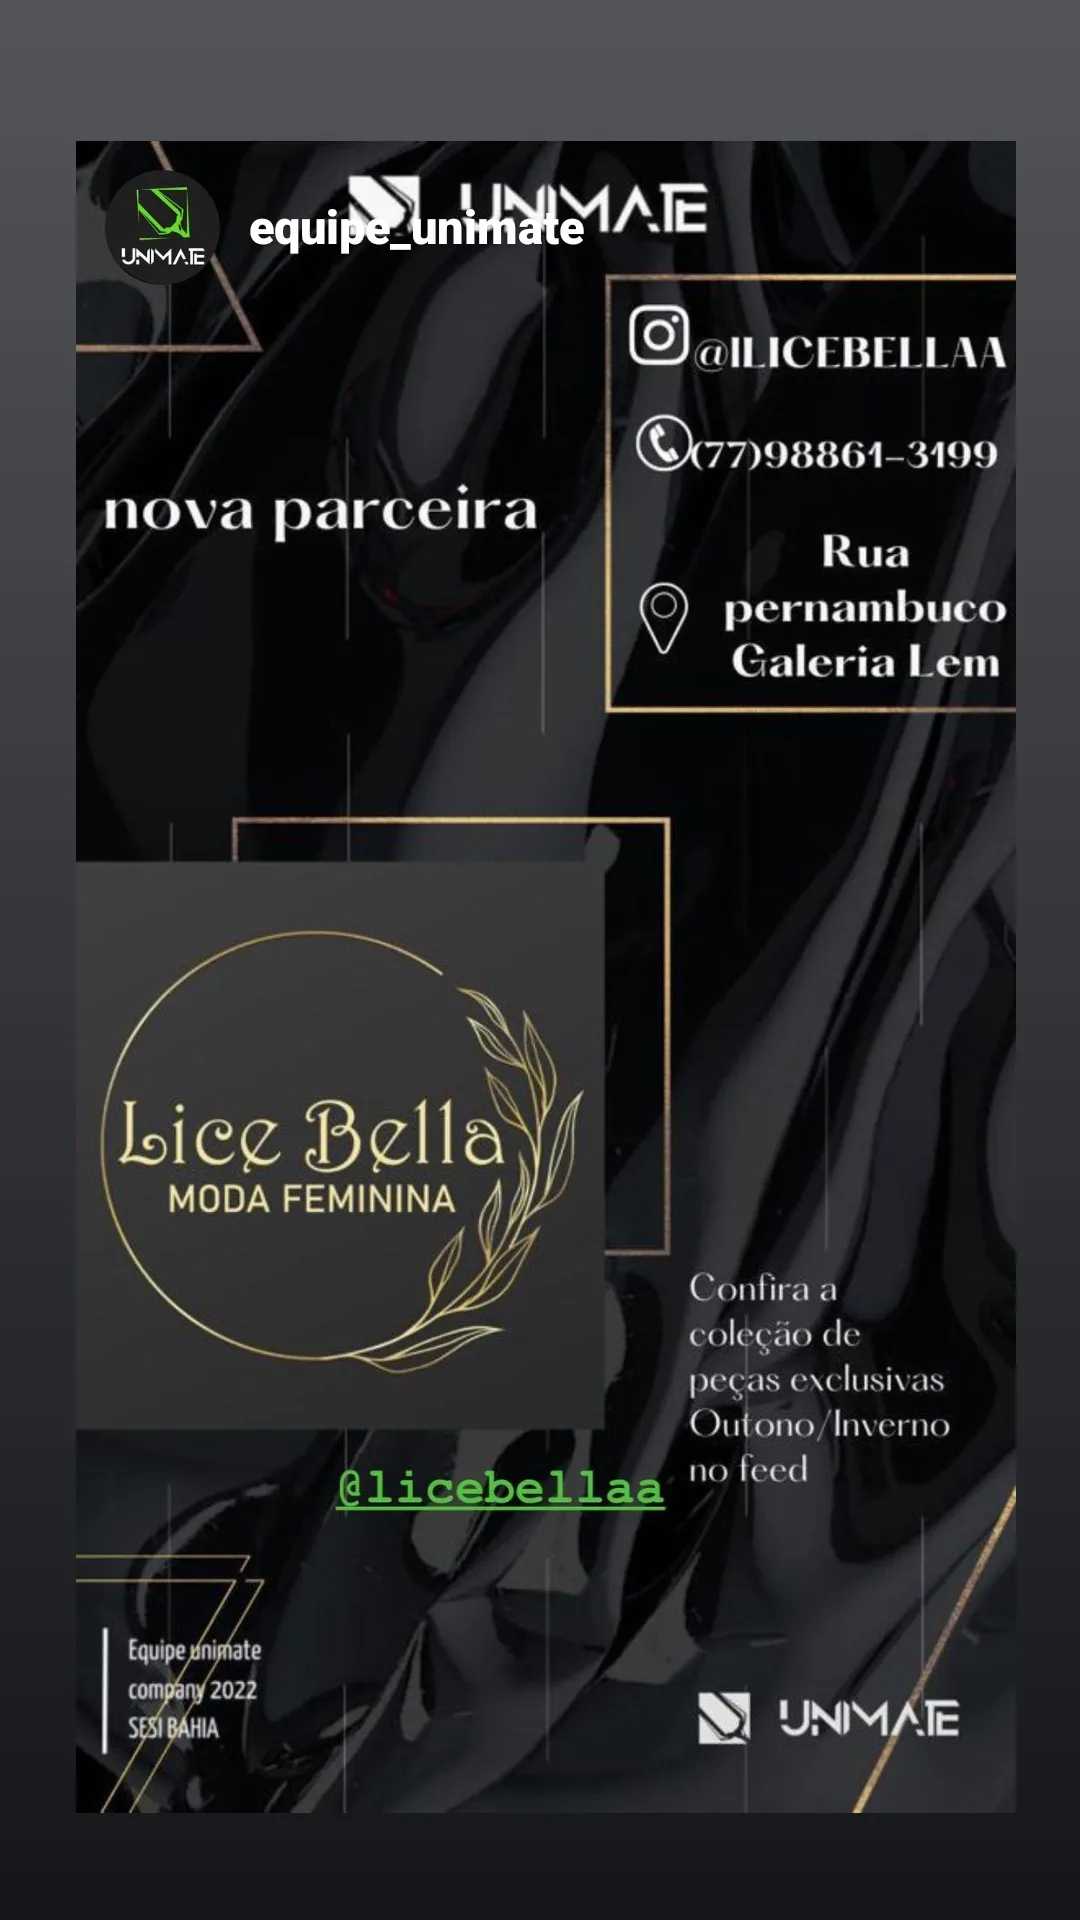 Lice Bella